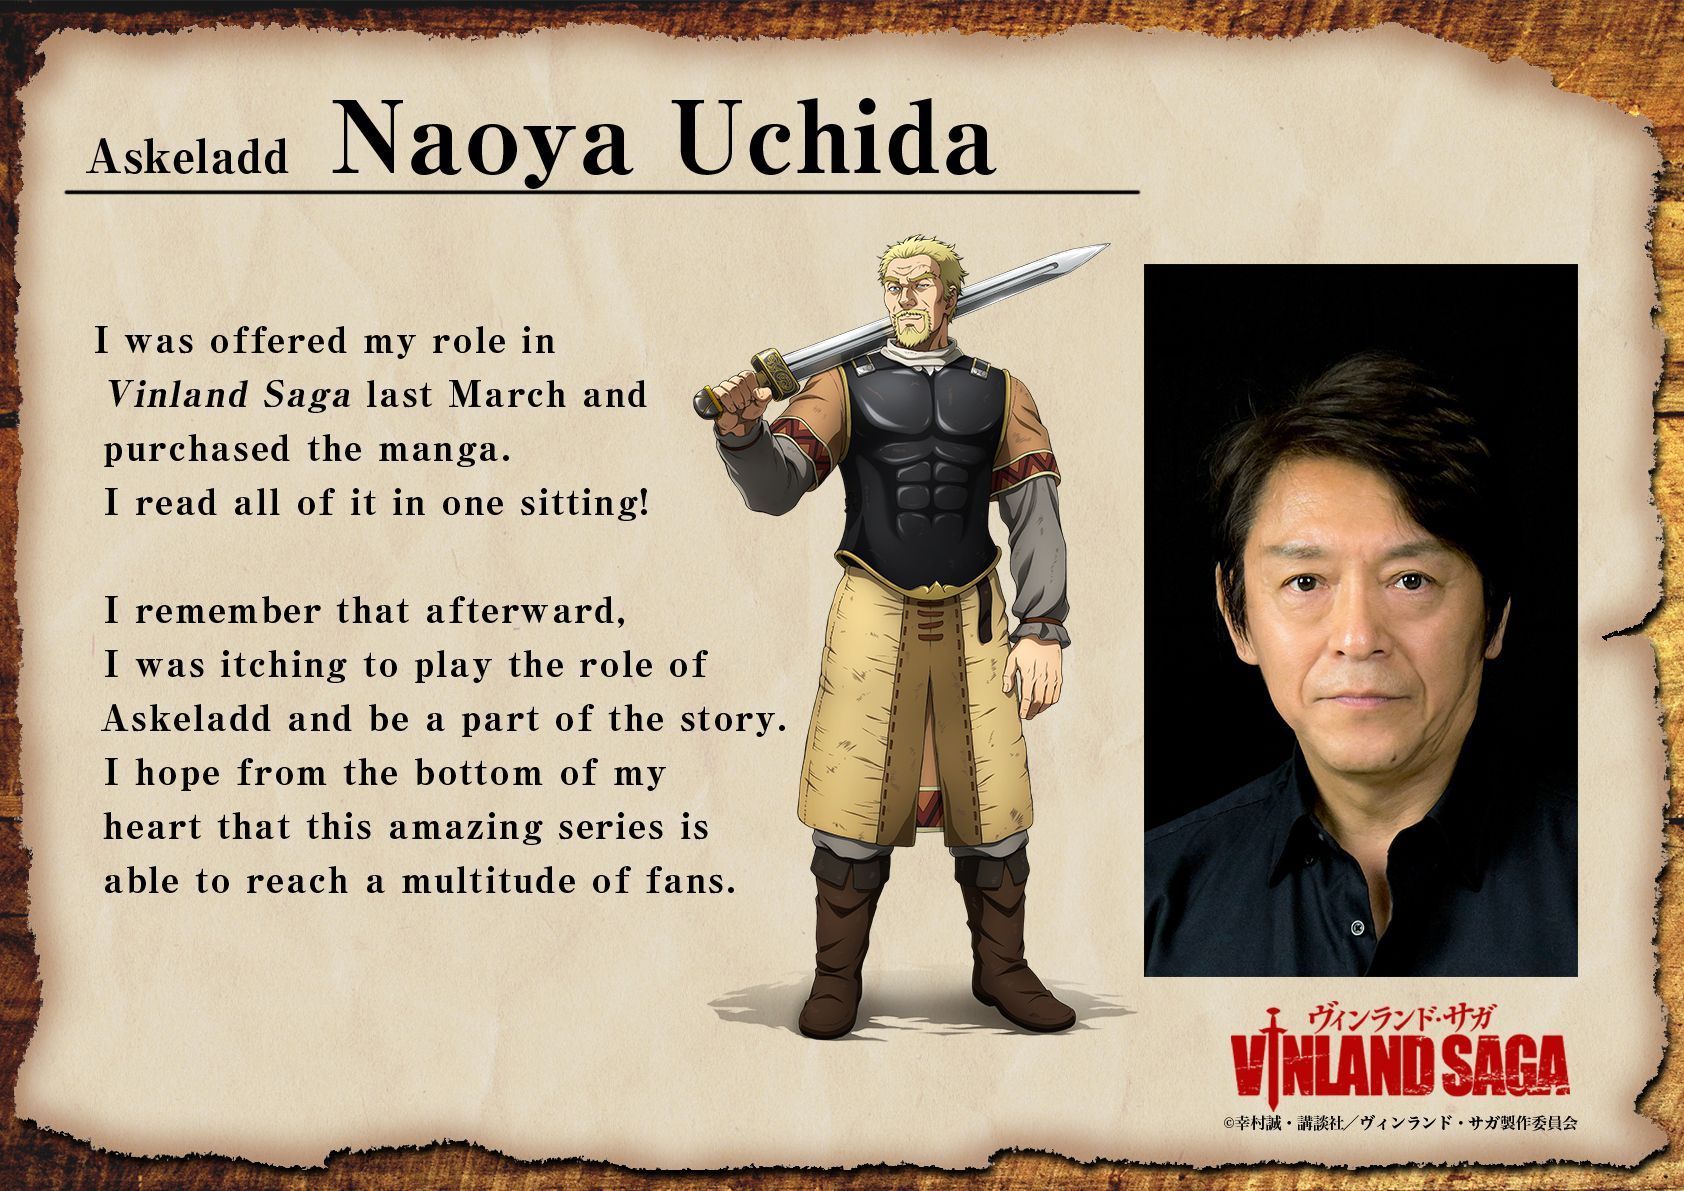 Vinland Saga World on X: Happy birthday to Naoya Uchida, the